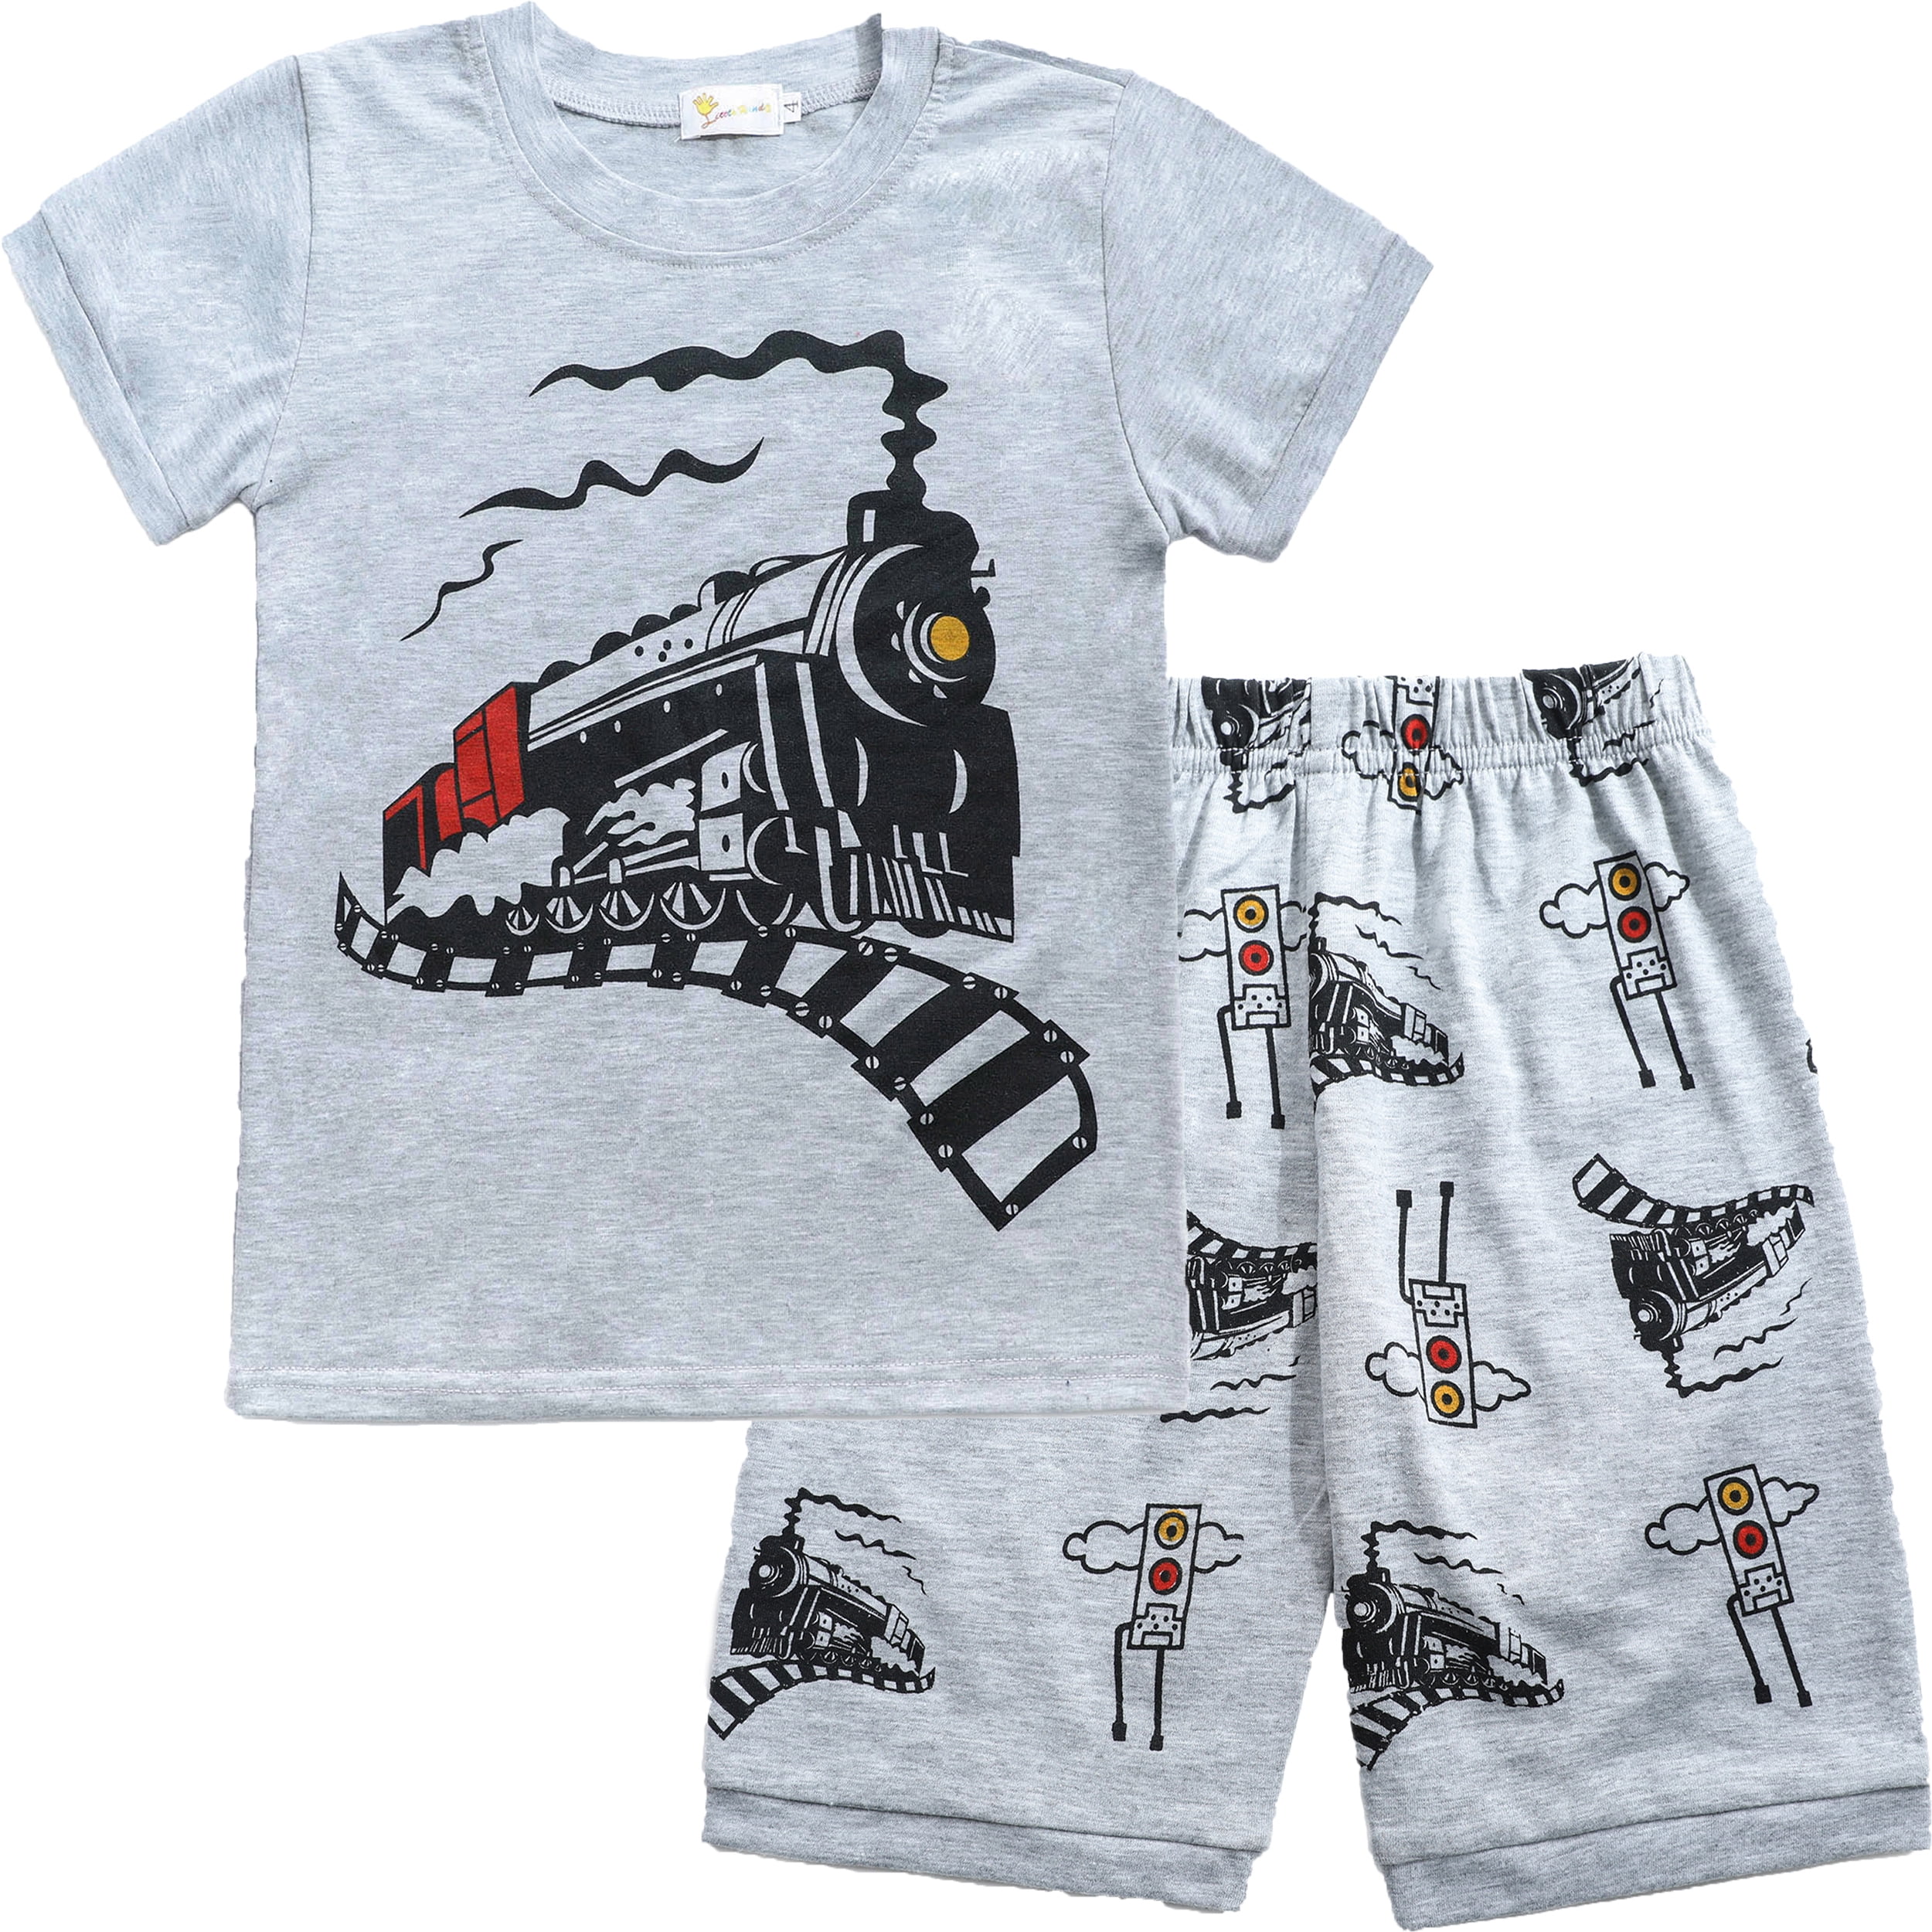 Boys Christmas Pyjamas Set Toddler Kids Cars Train Truck Print Pjs Sets 100% Cotton Long Sleeve Nightwear Sleepwear Clothes Set for Boy